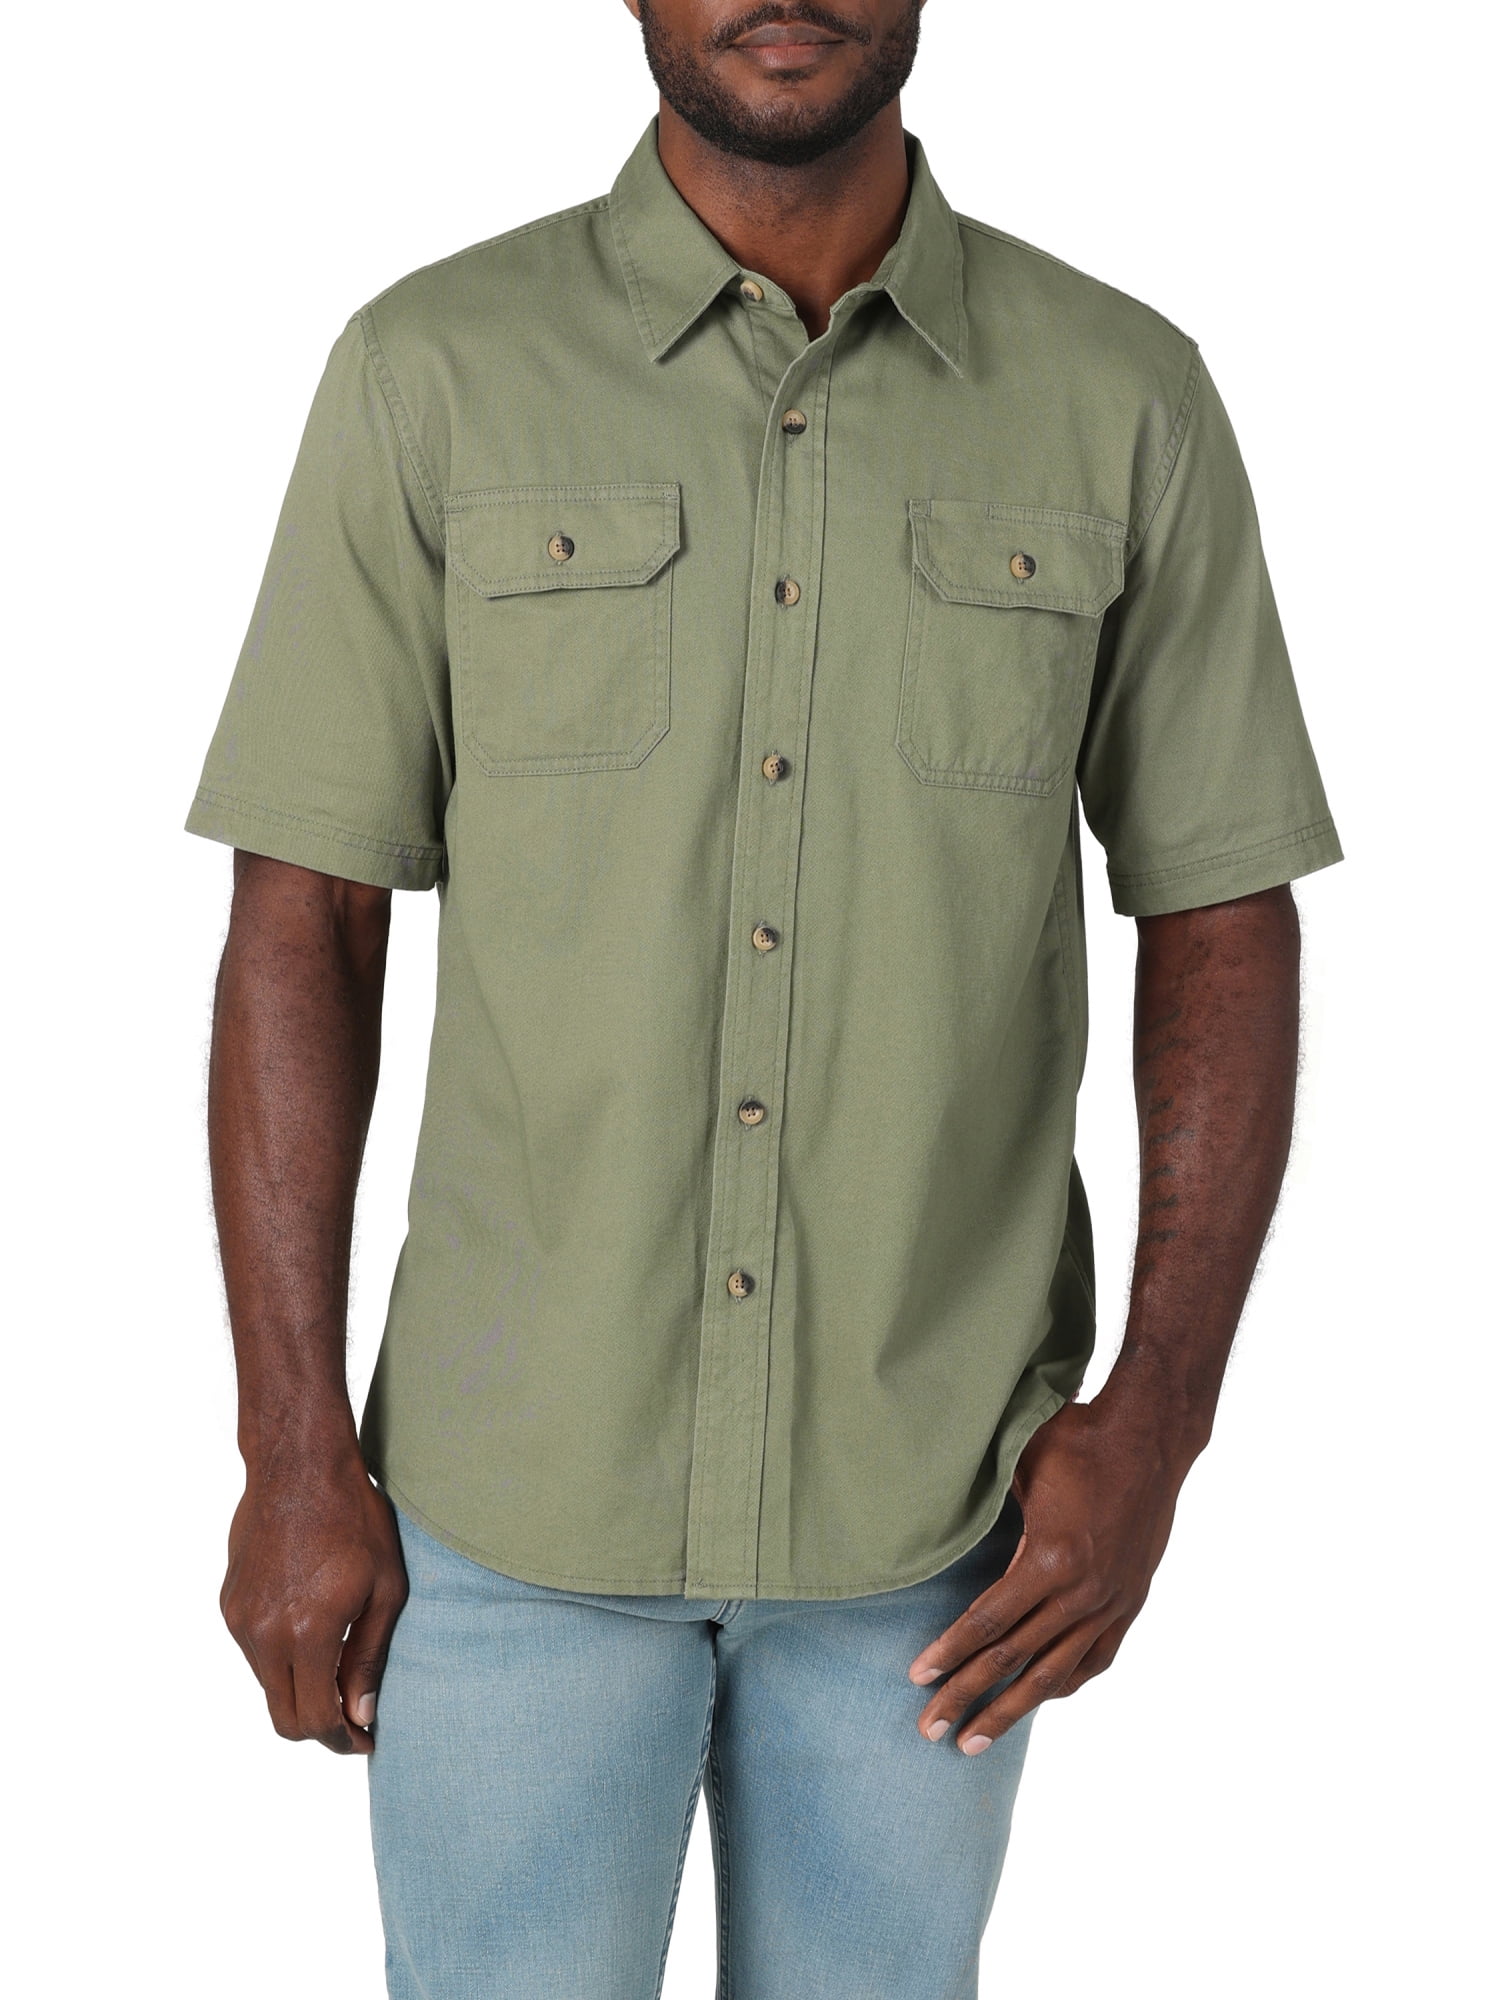 Wrangler Men's Short Sleeve Woven Shirts, Sizes S-5XL - Walmart.com